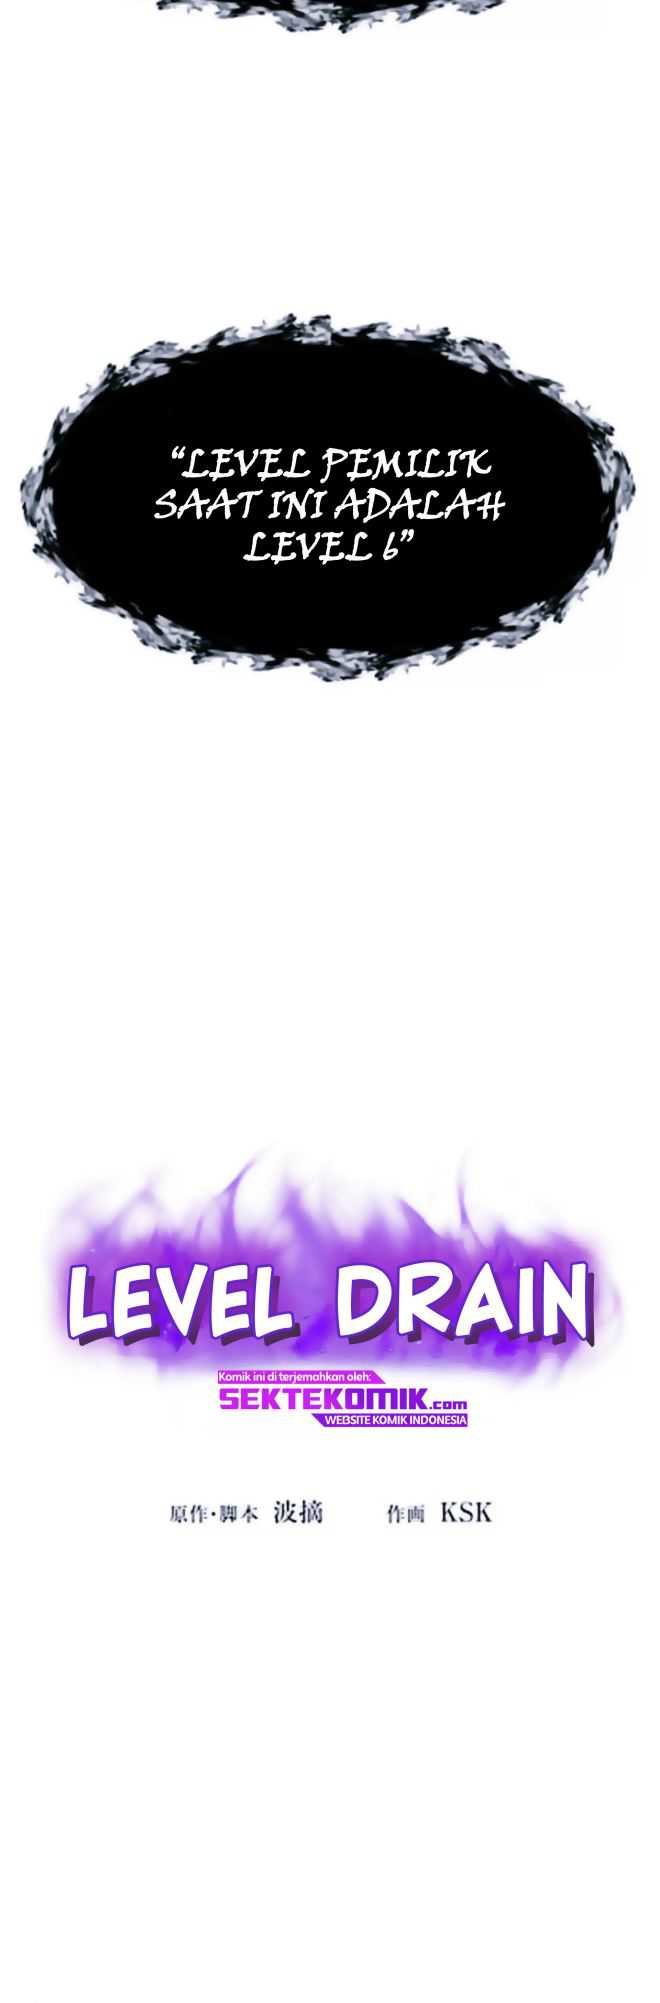 Level Drain Chapter 01